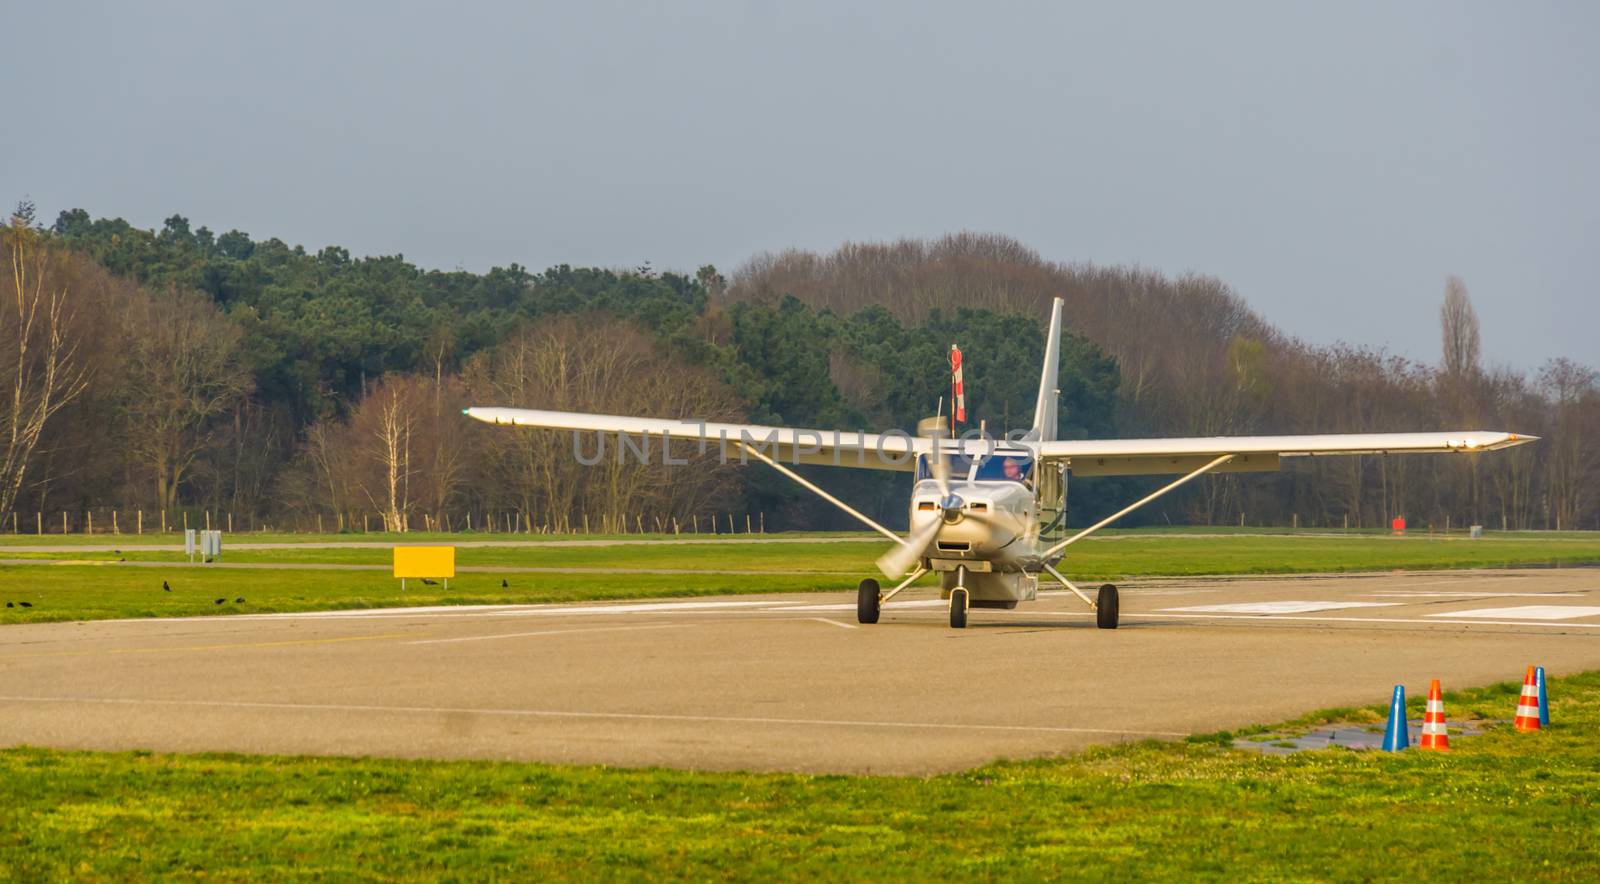 white airplane landing on the air strip, recreational sport and hobby, air transportation by charlottebleijenberg